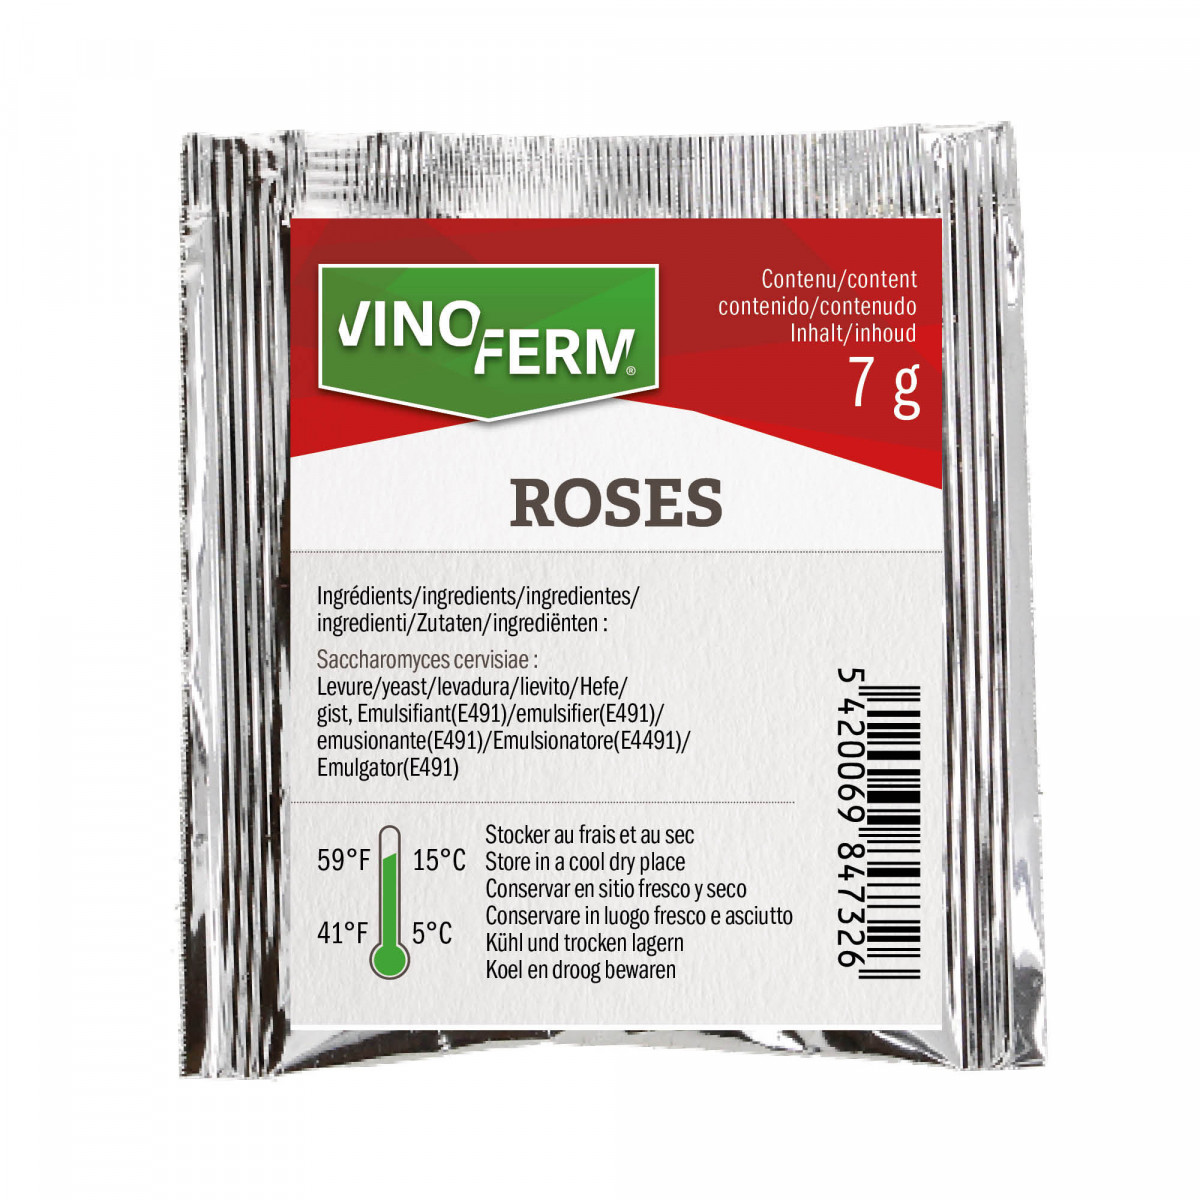 Dried wine yeast Vinoferm   Roses 7 g